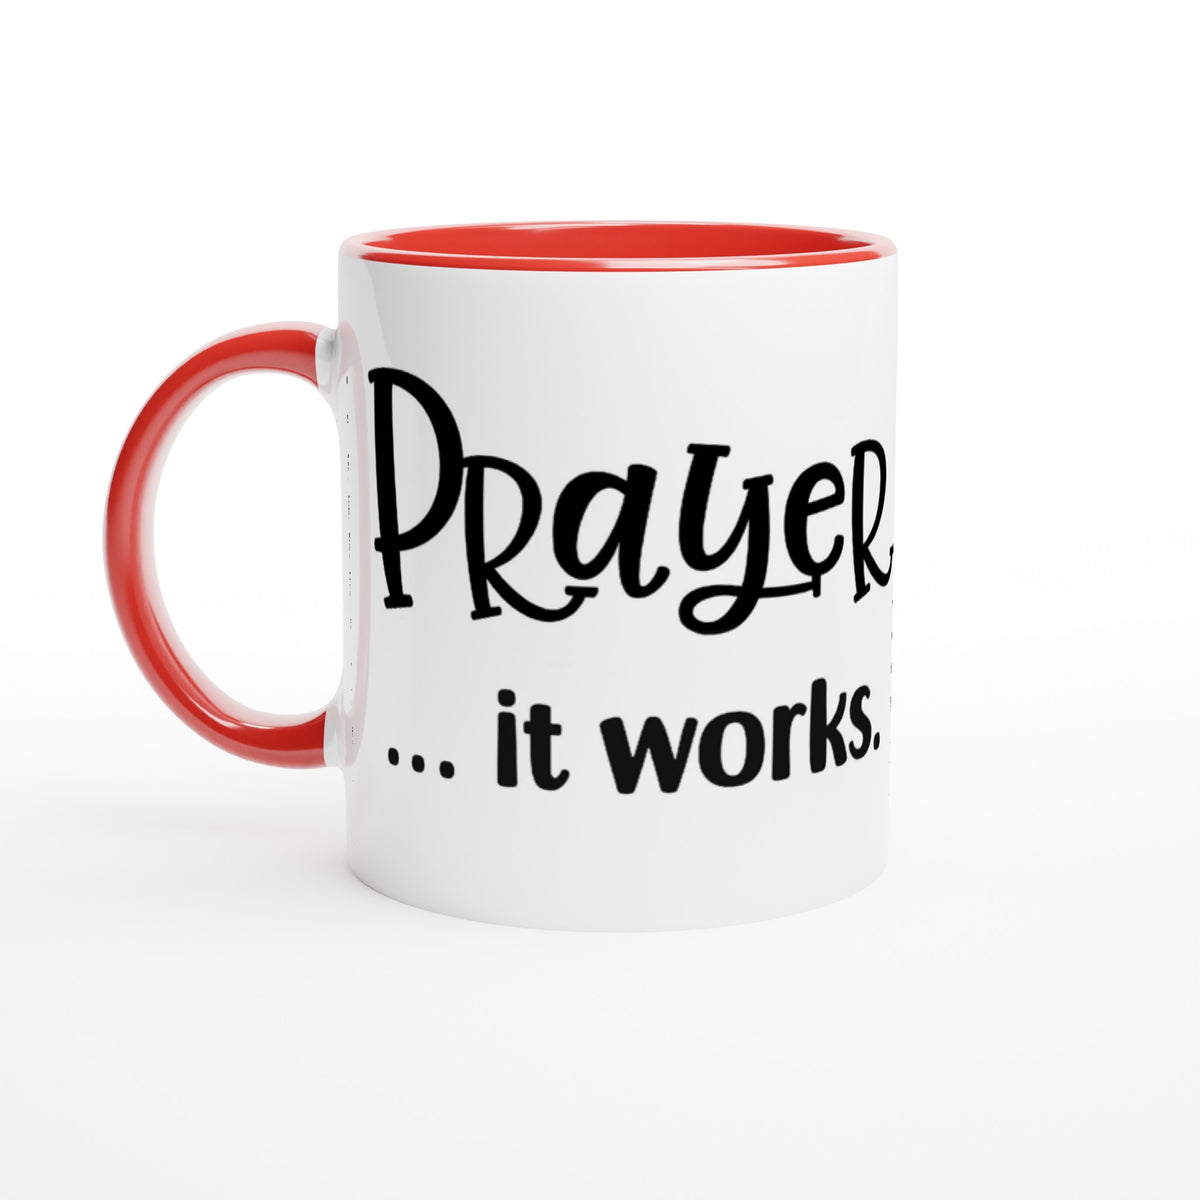 Prayer... it works - Beautiful Mug